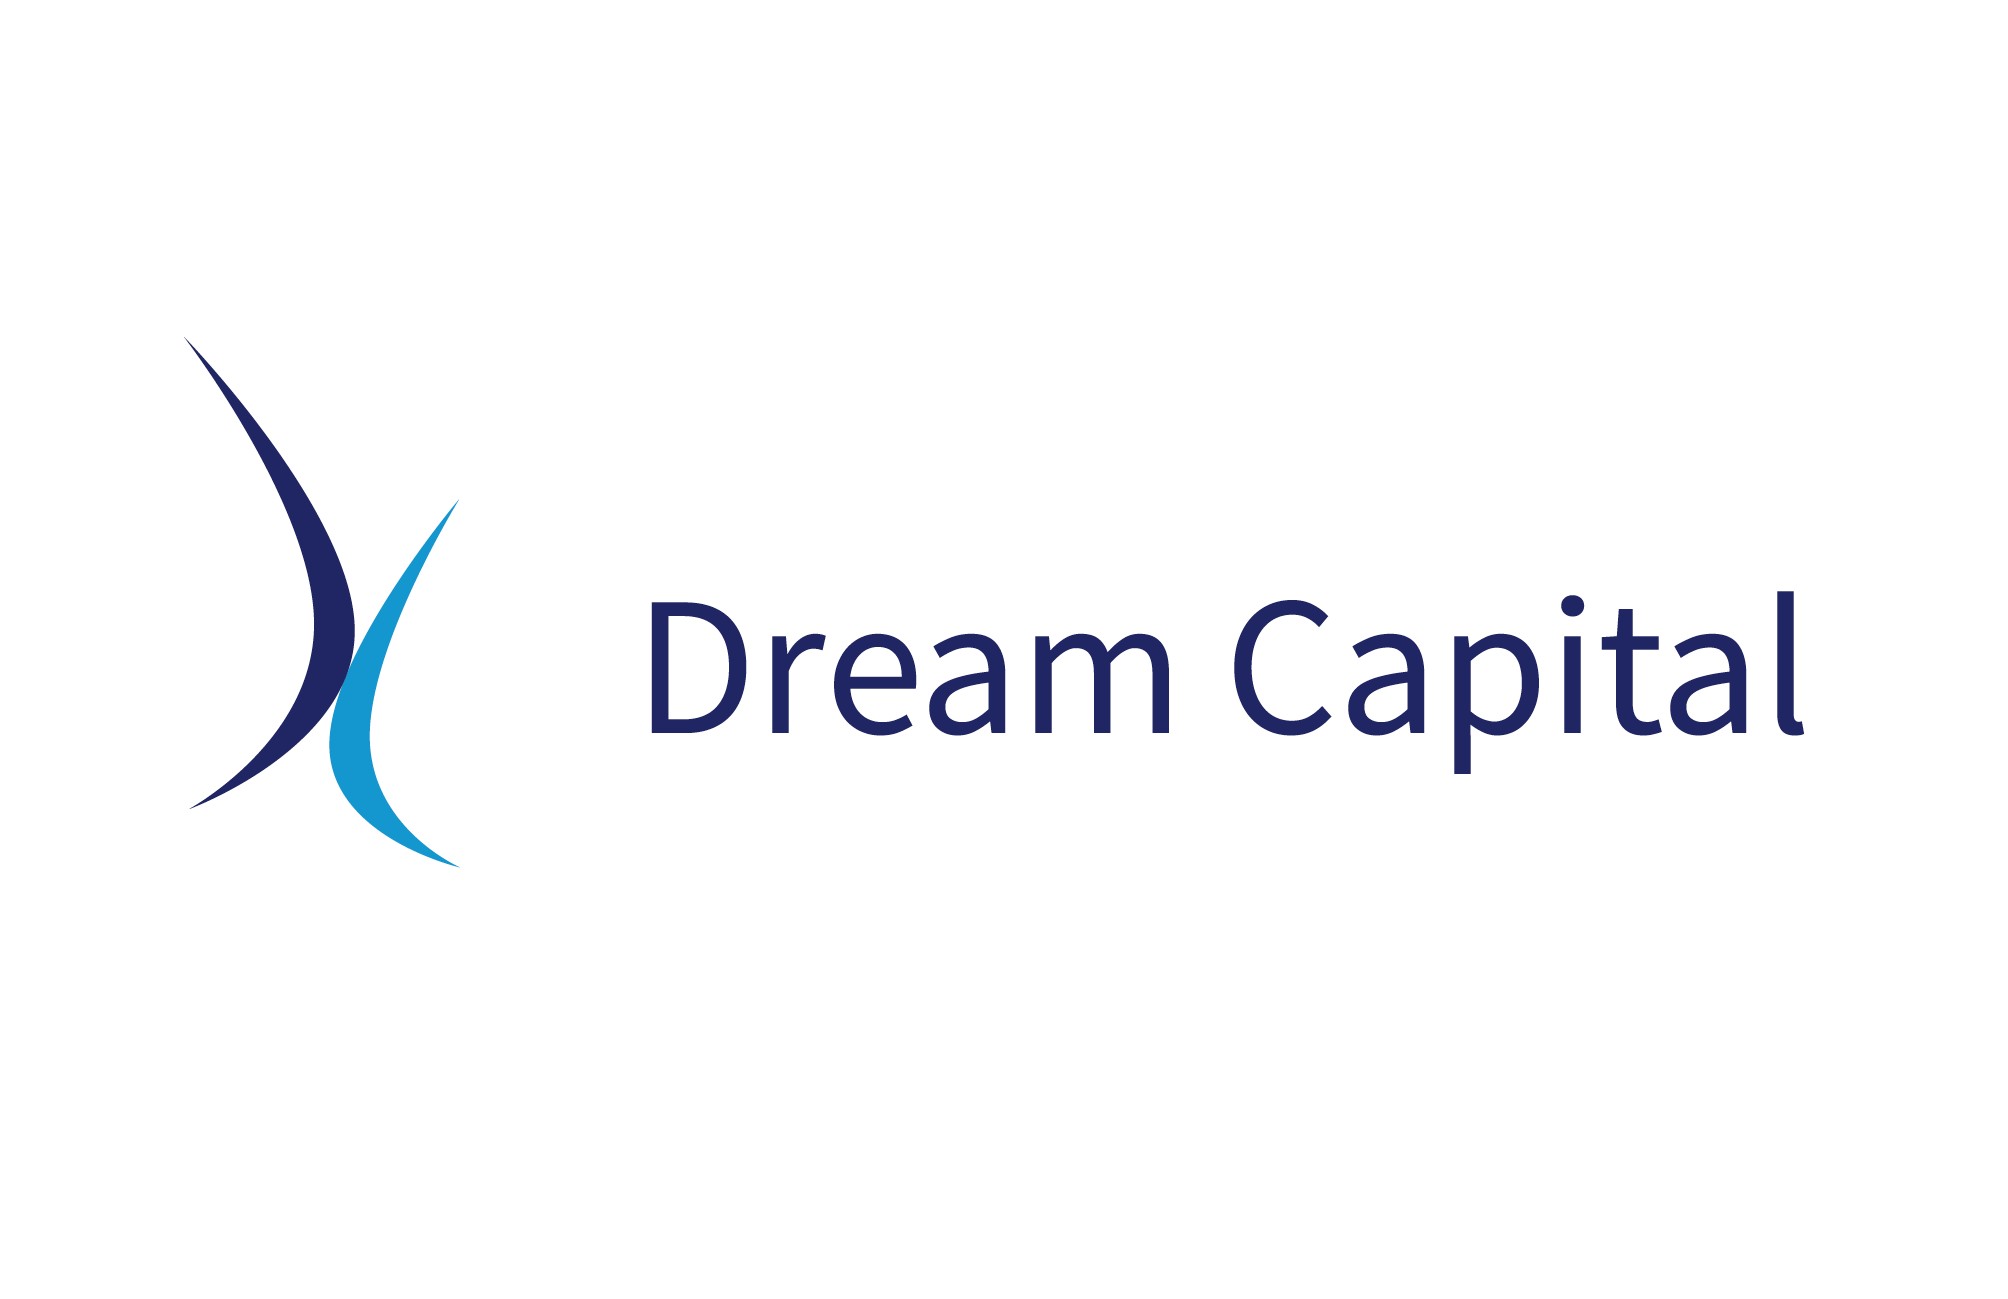 dream capital employees, location, careers | linkedin